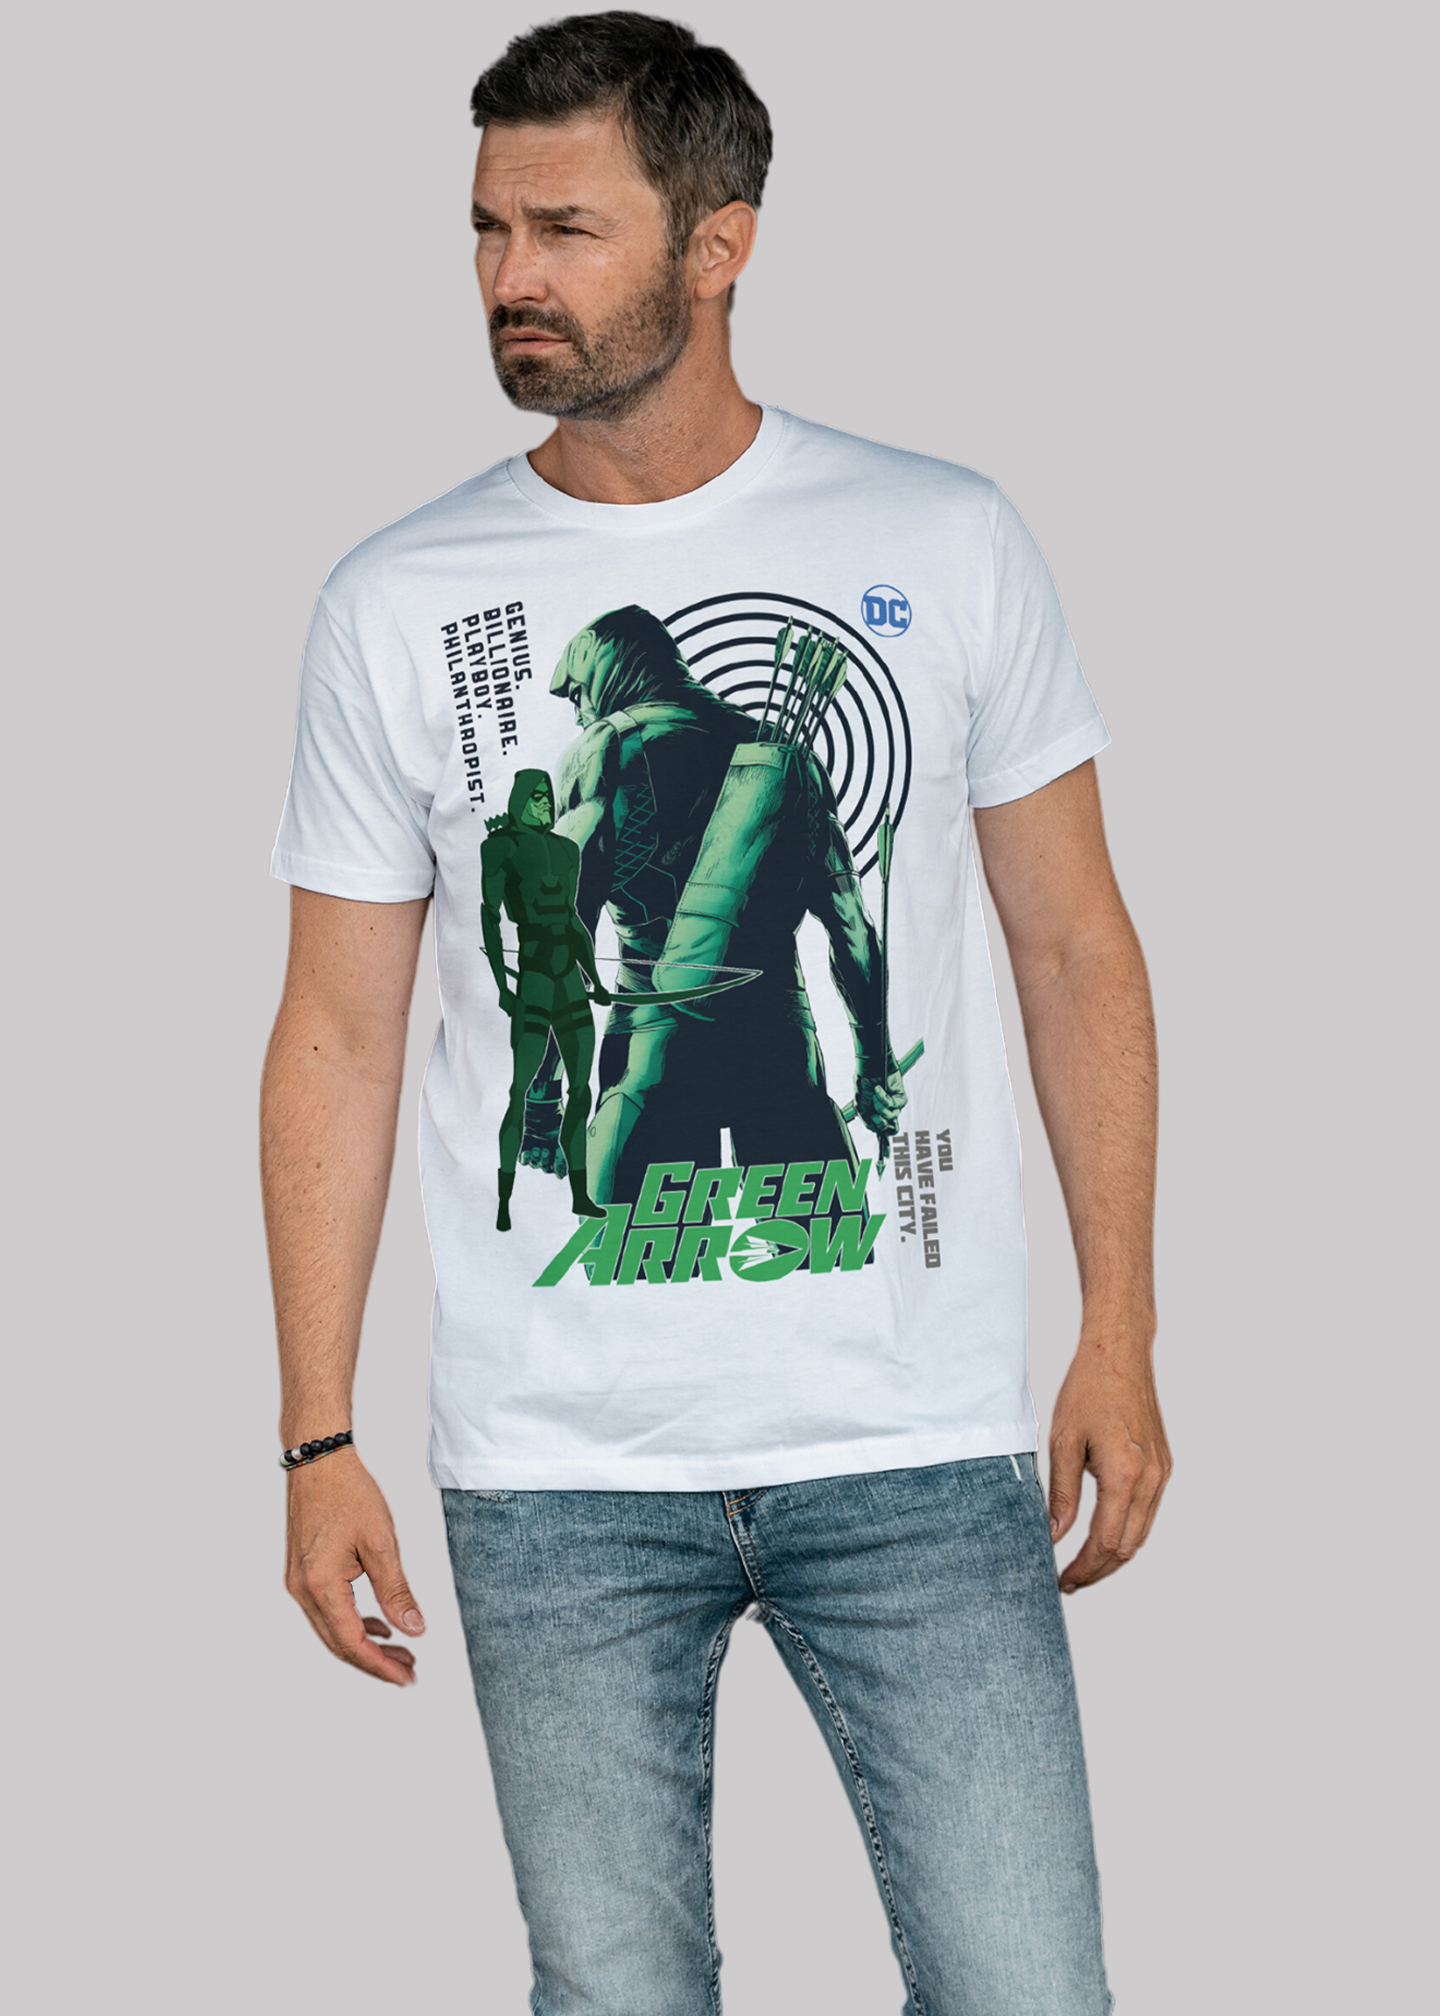 Green arrow Printed Half Sleeve Premium Cotton T-shirt For Men